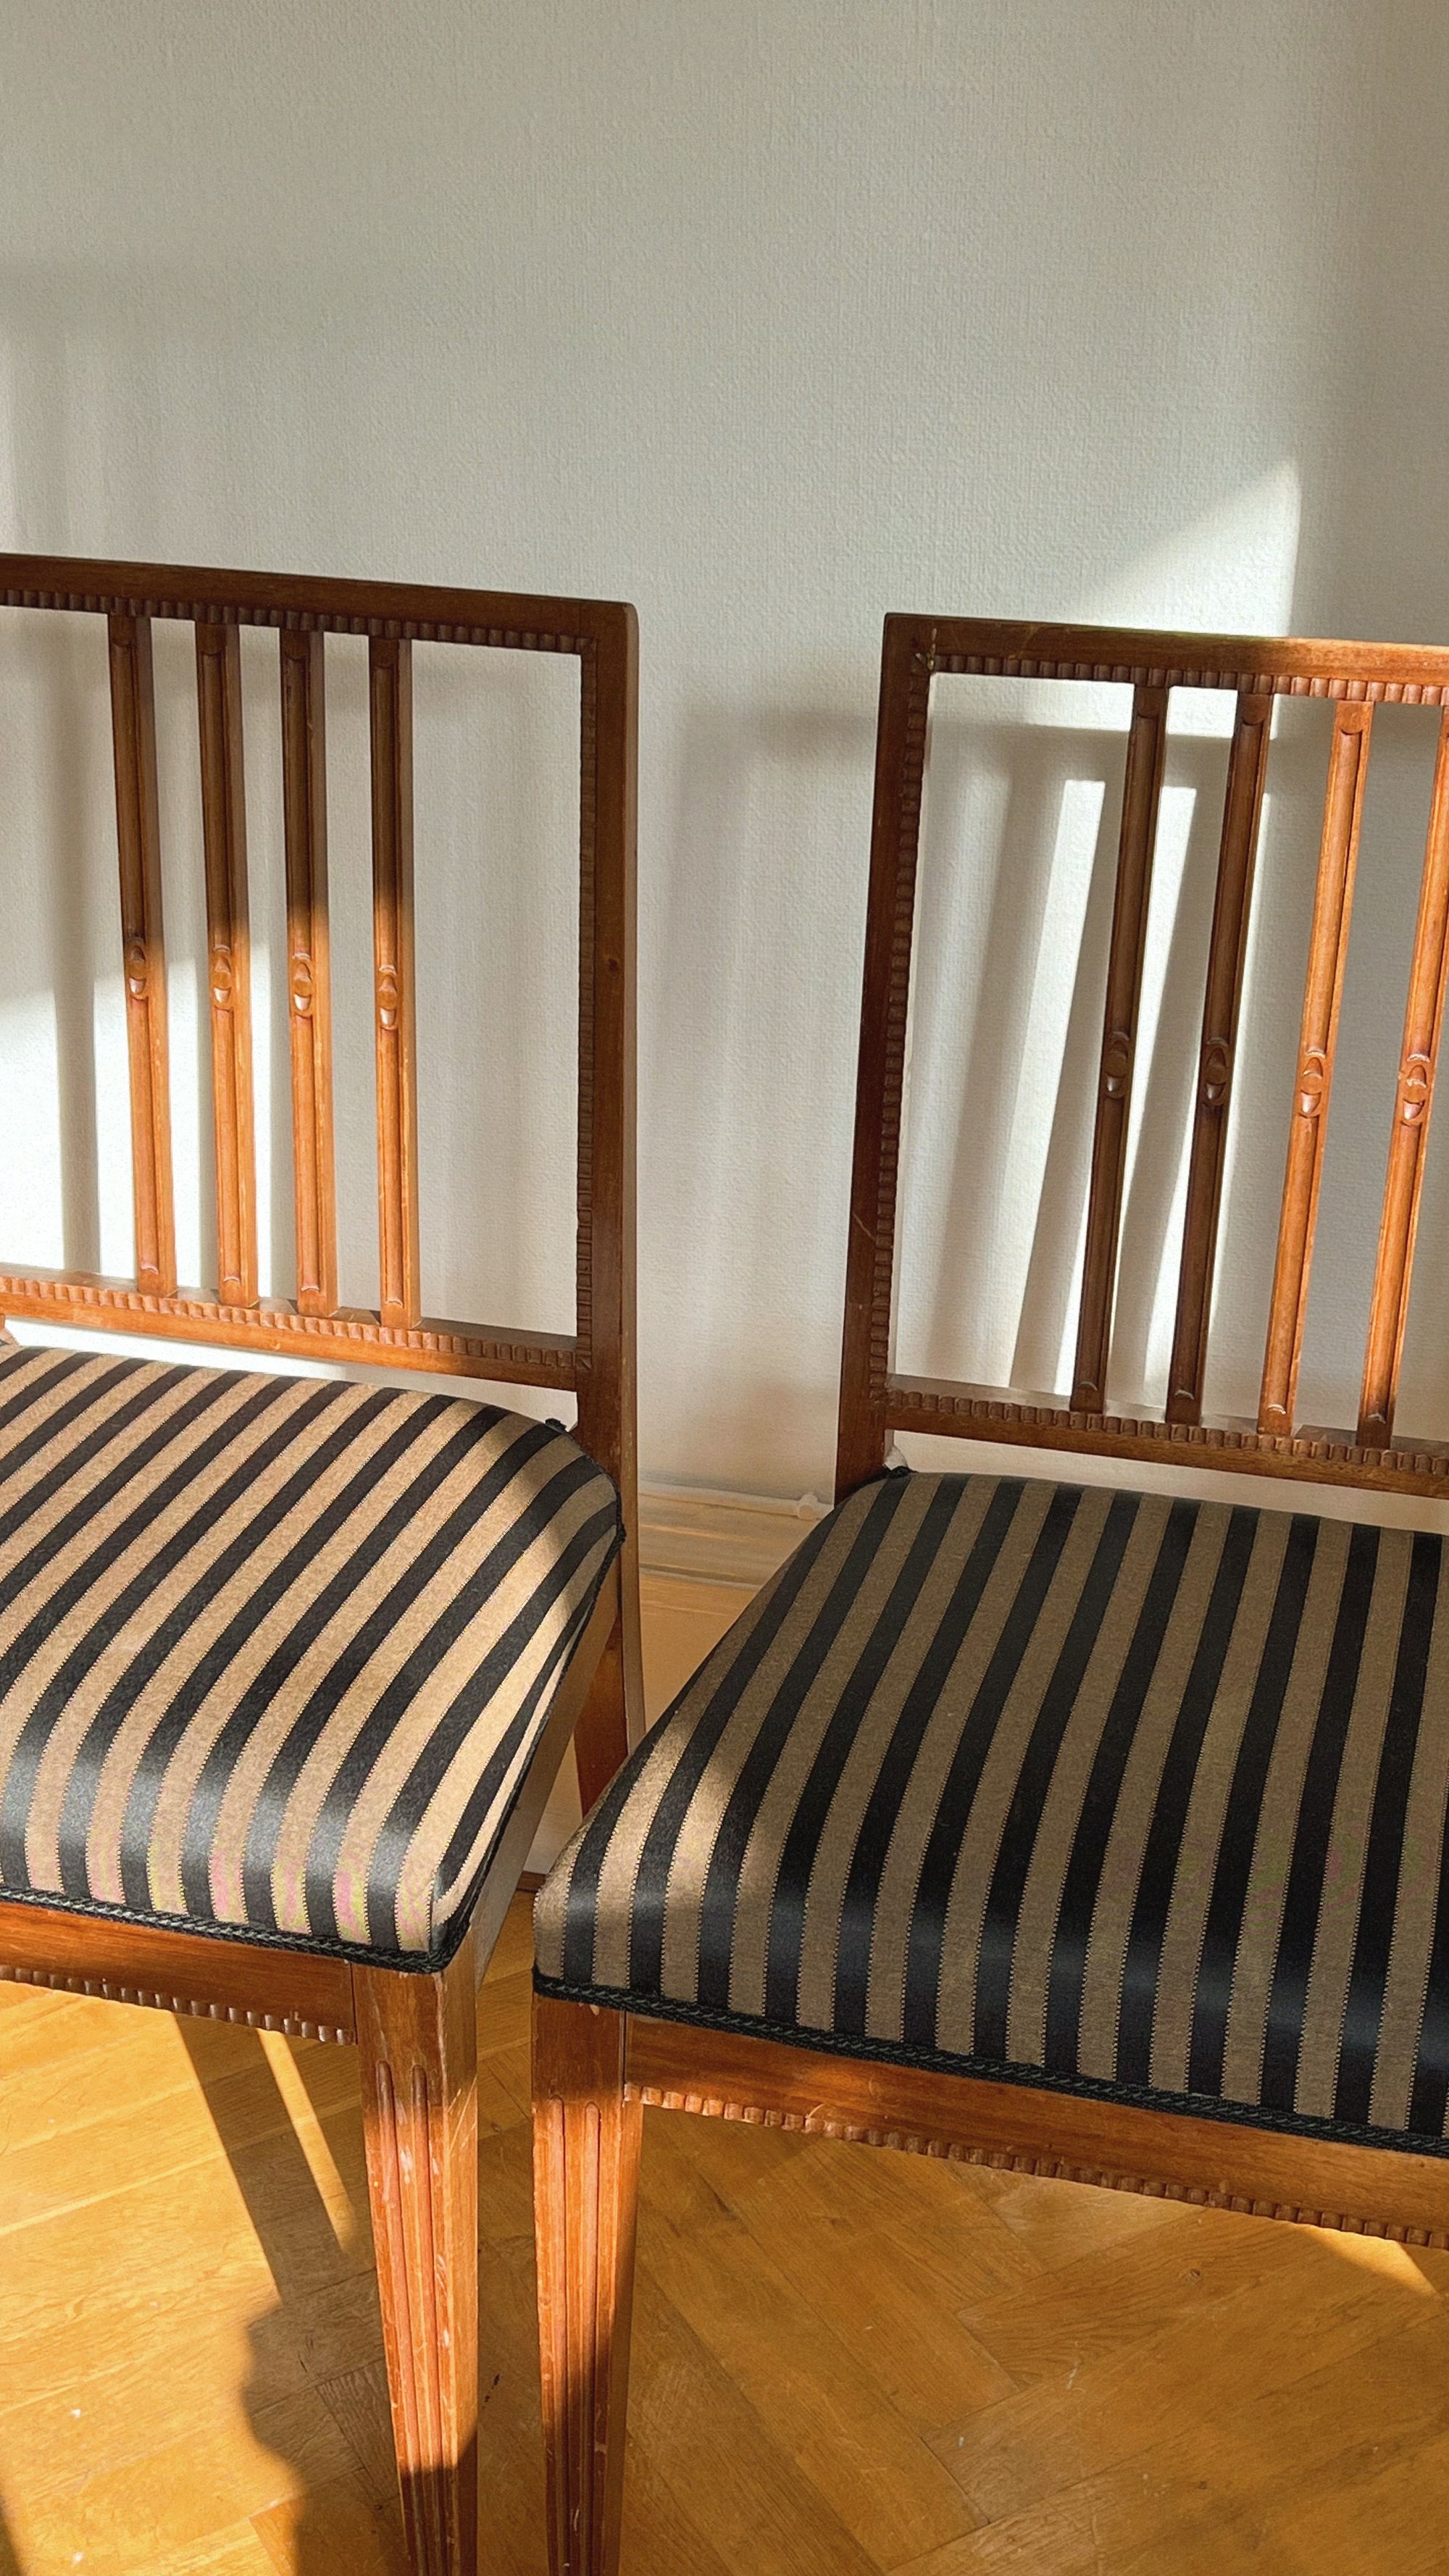 Gustavian Chairs